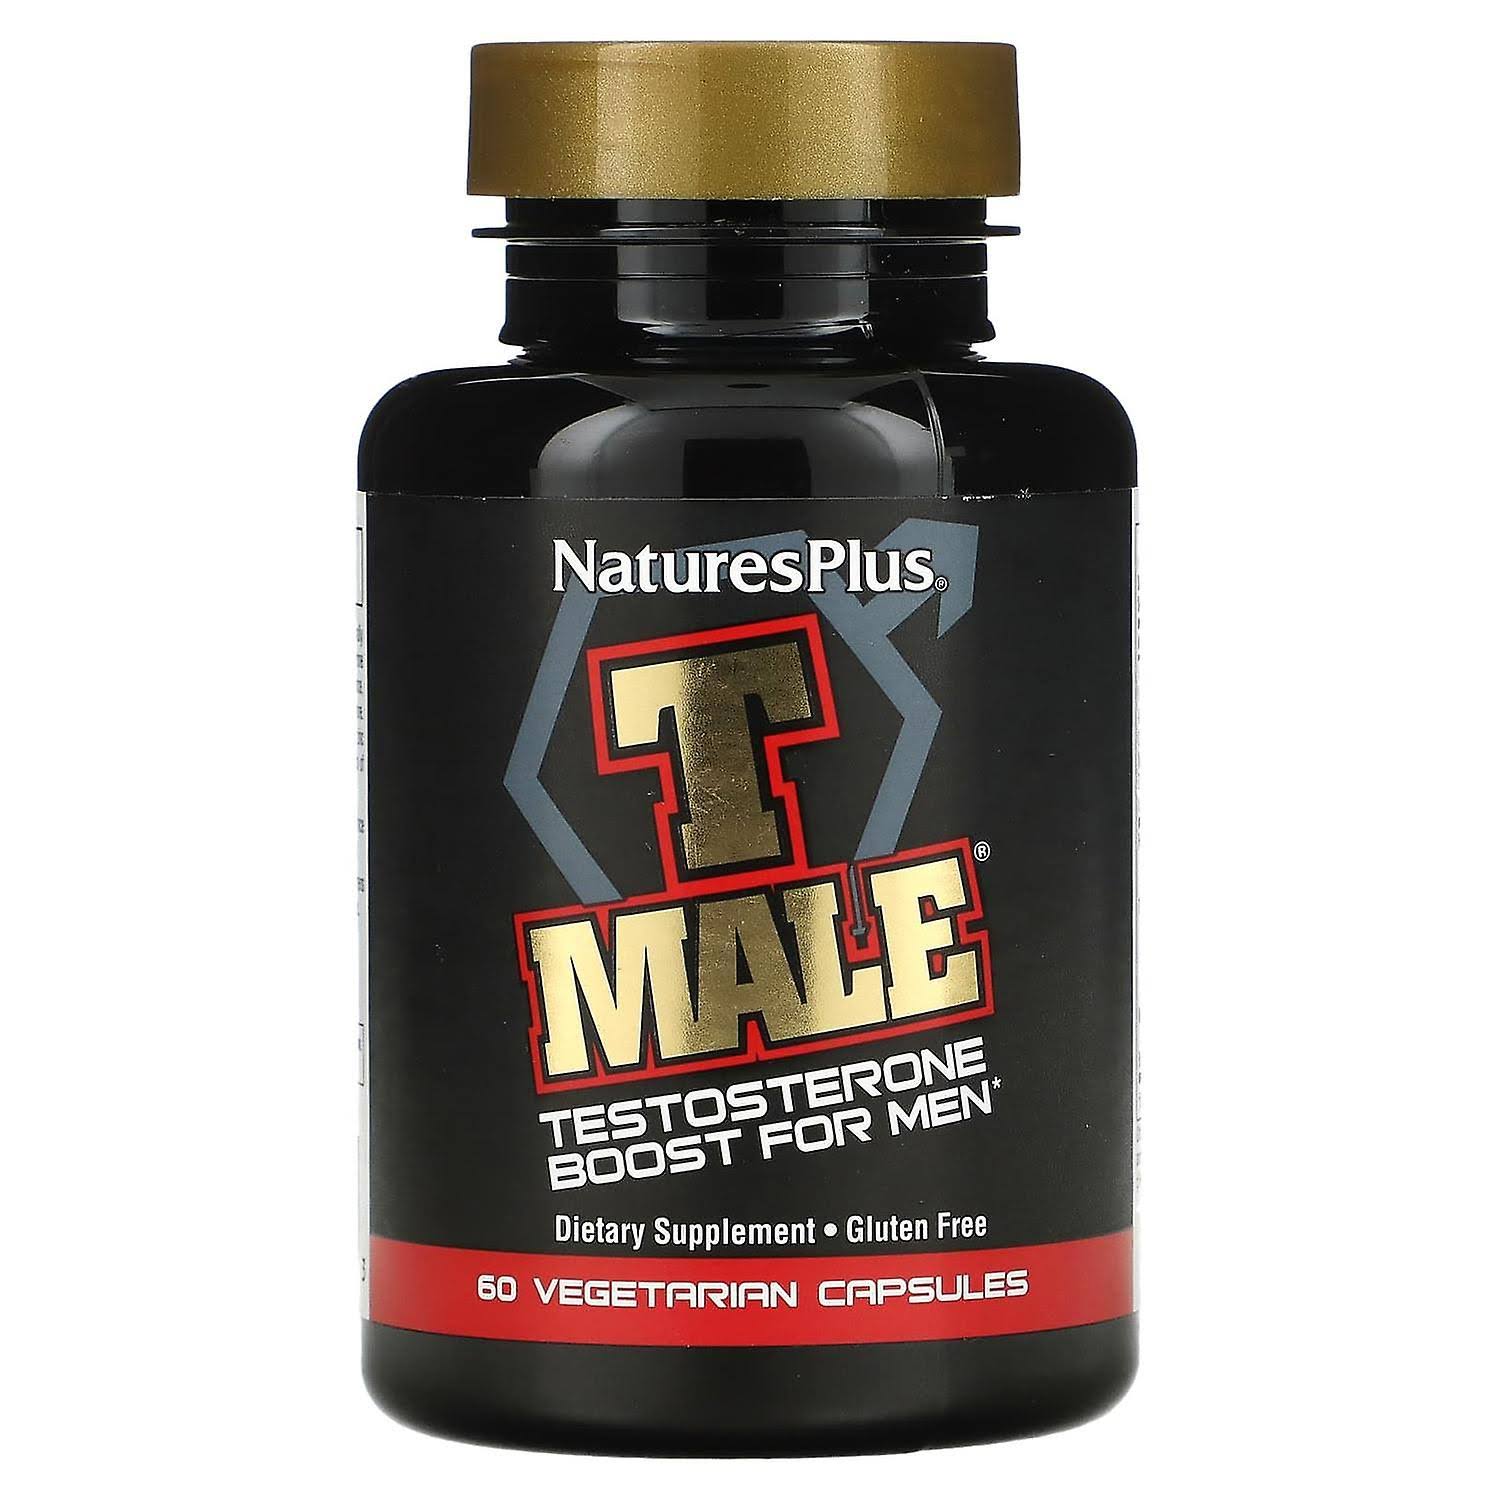 Nature's Plus T Male Testosterone Boost For Men - 60 Capsules